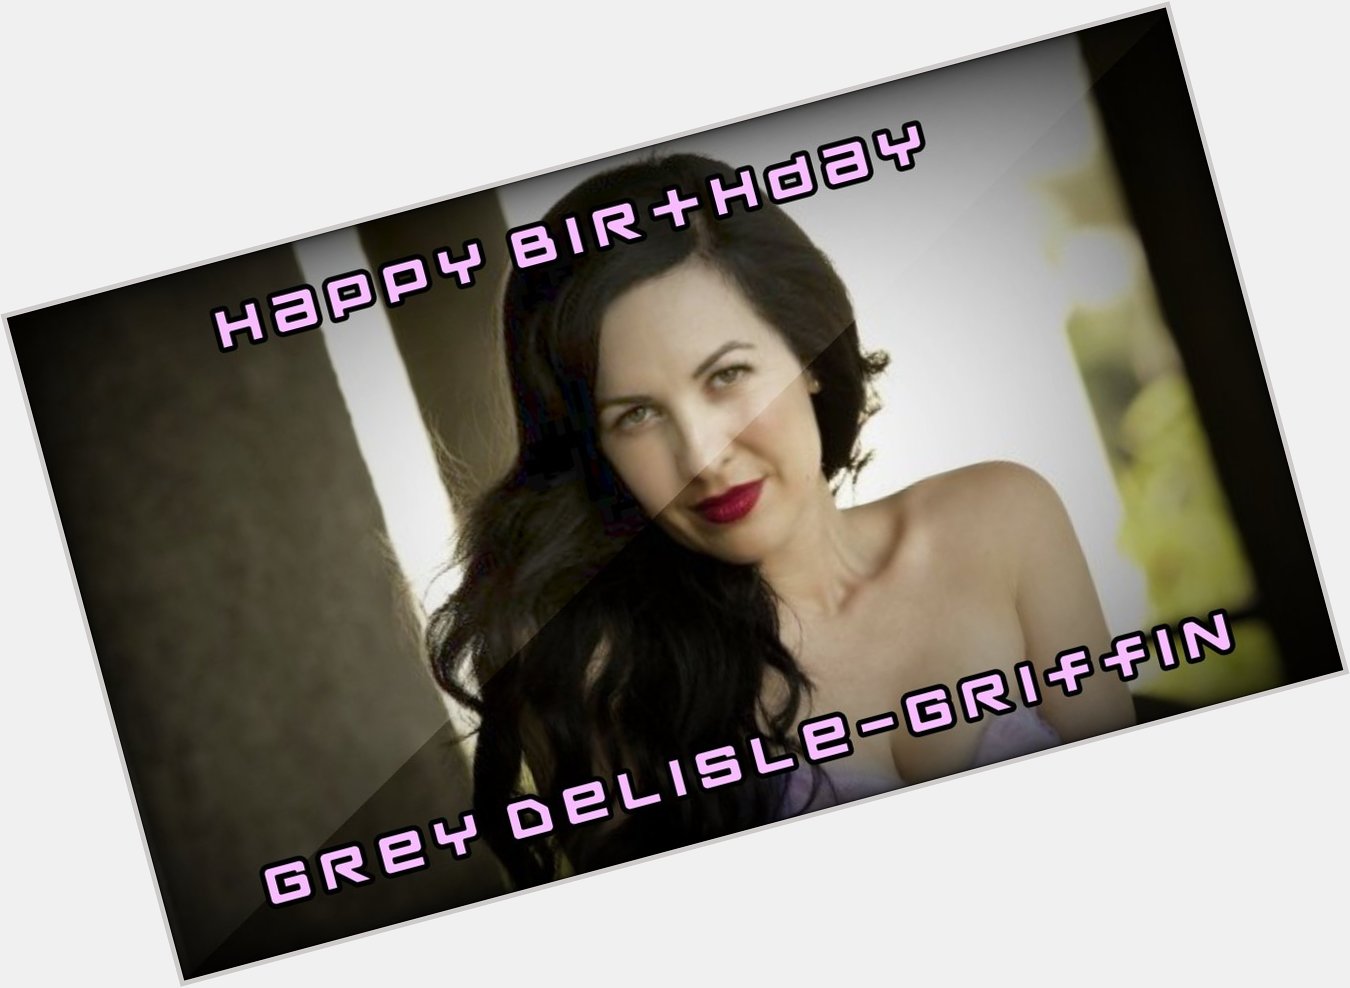 Happy birthday to my favorite voice actress/Q u e e n Grey DeLisle-Griffin 